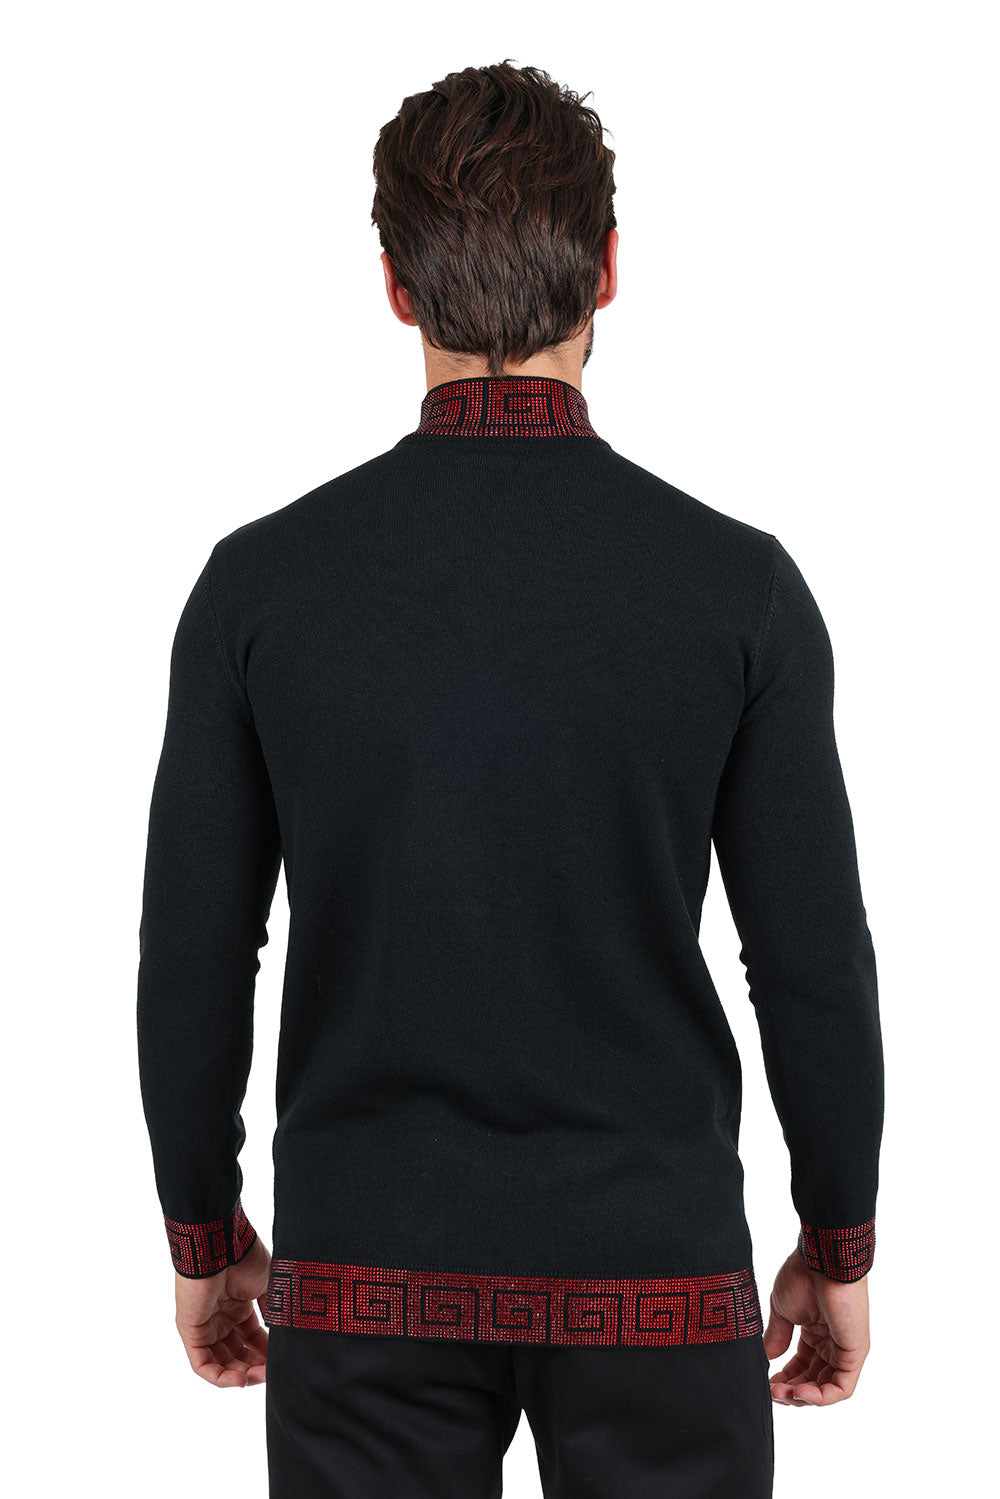 Barabas Men's Rhinestones Greek Key Pattern Turtleneck Sweater 2LS2106 Black Red